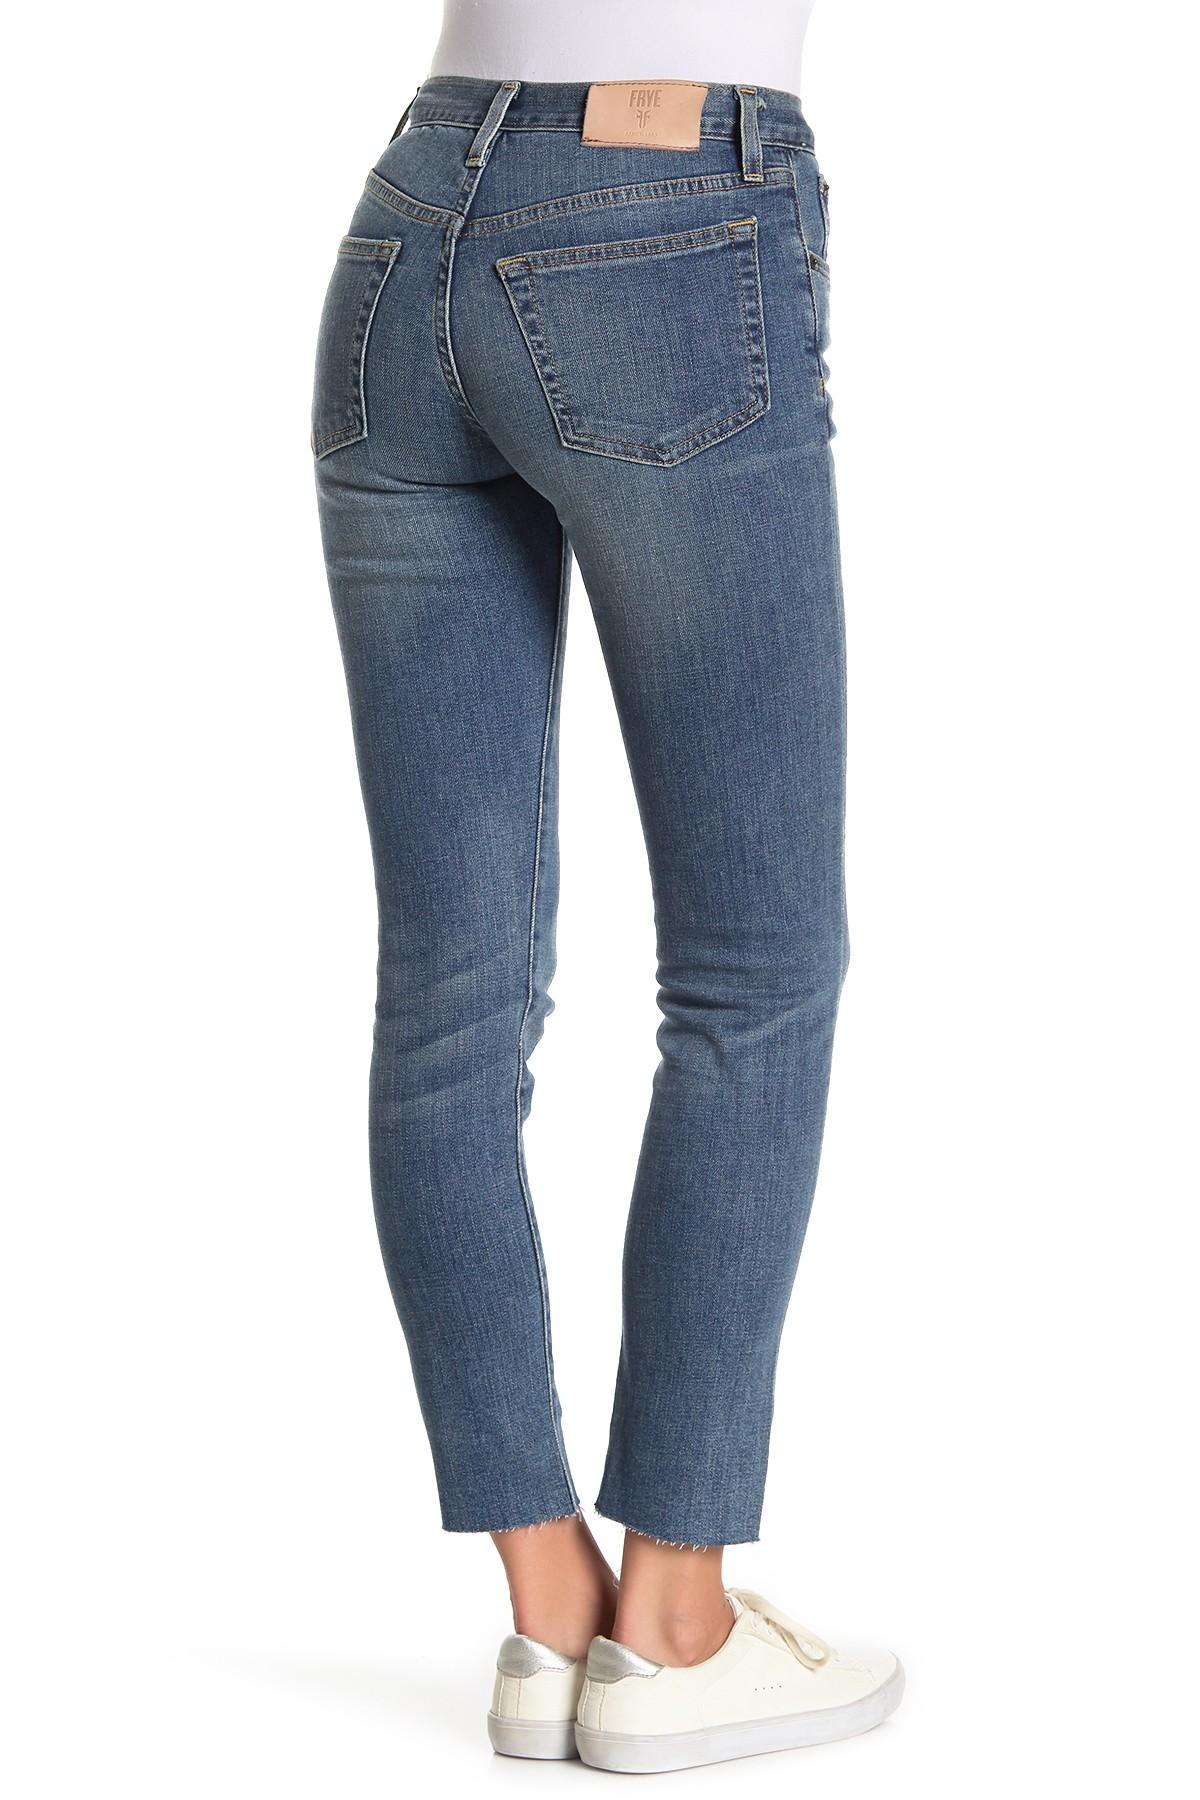 Frye Denim Sienna Cropped Skinny Jeans in Blue - Lyst